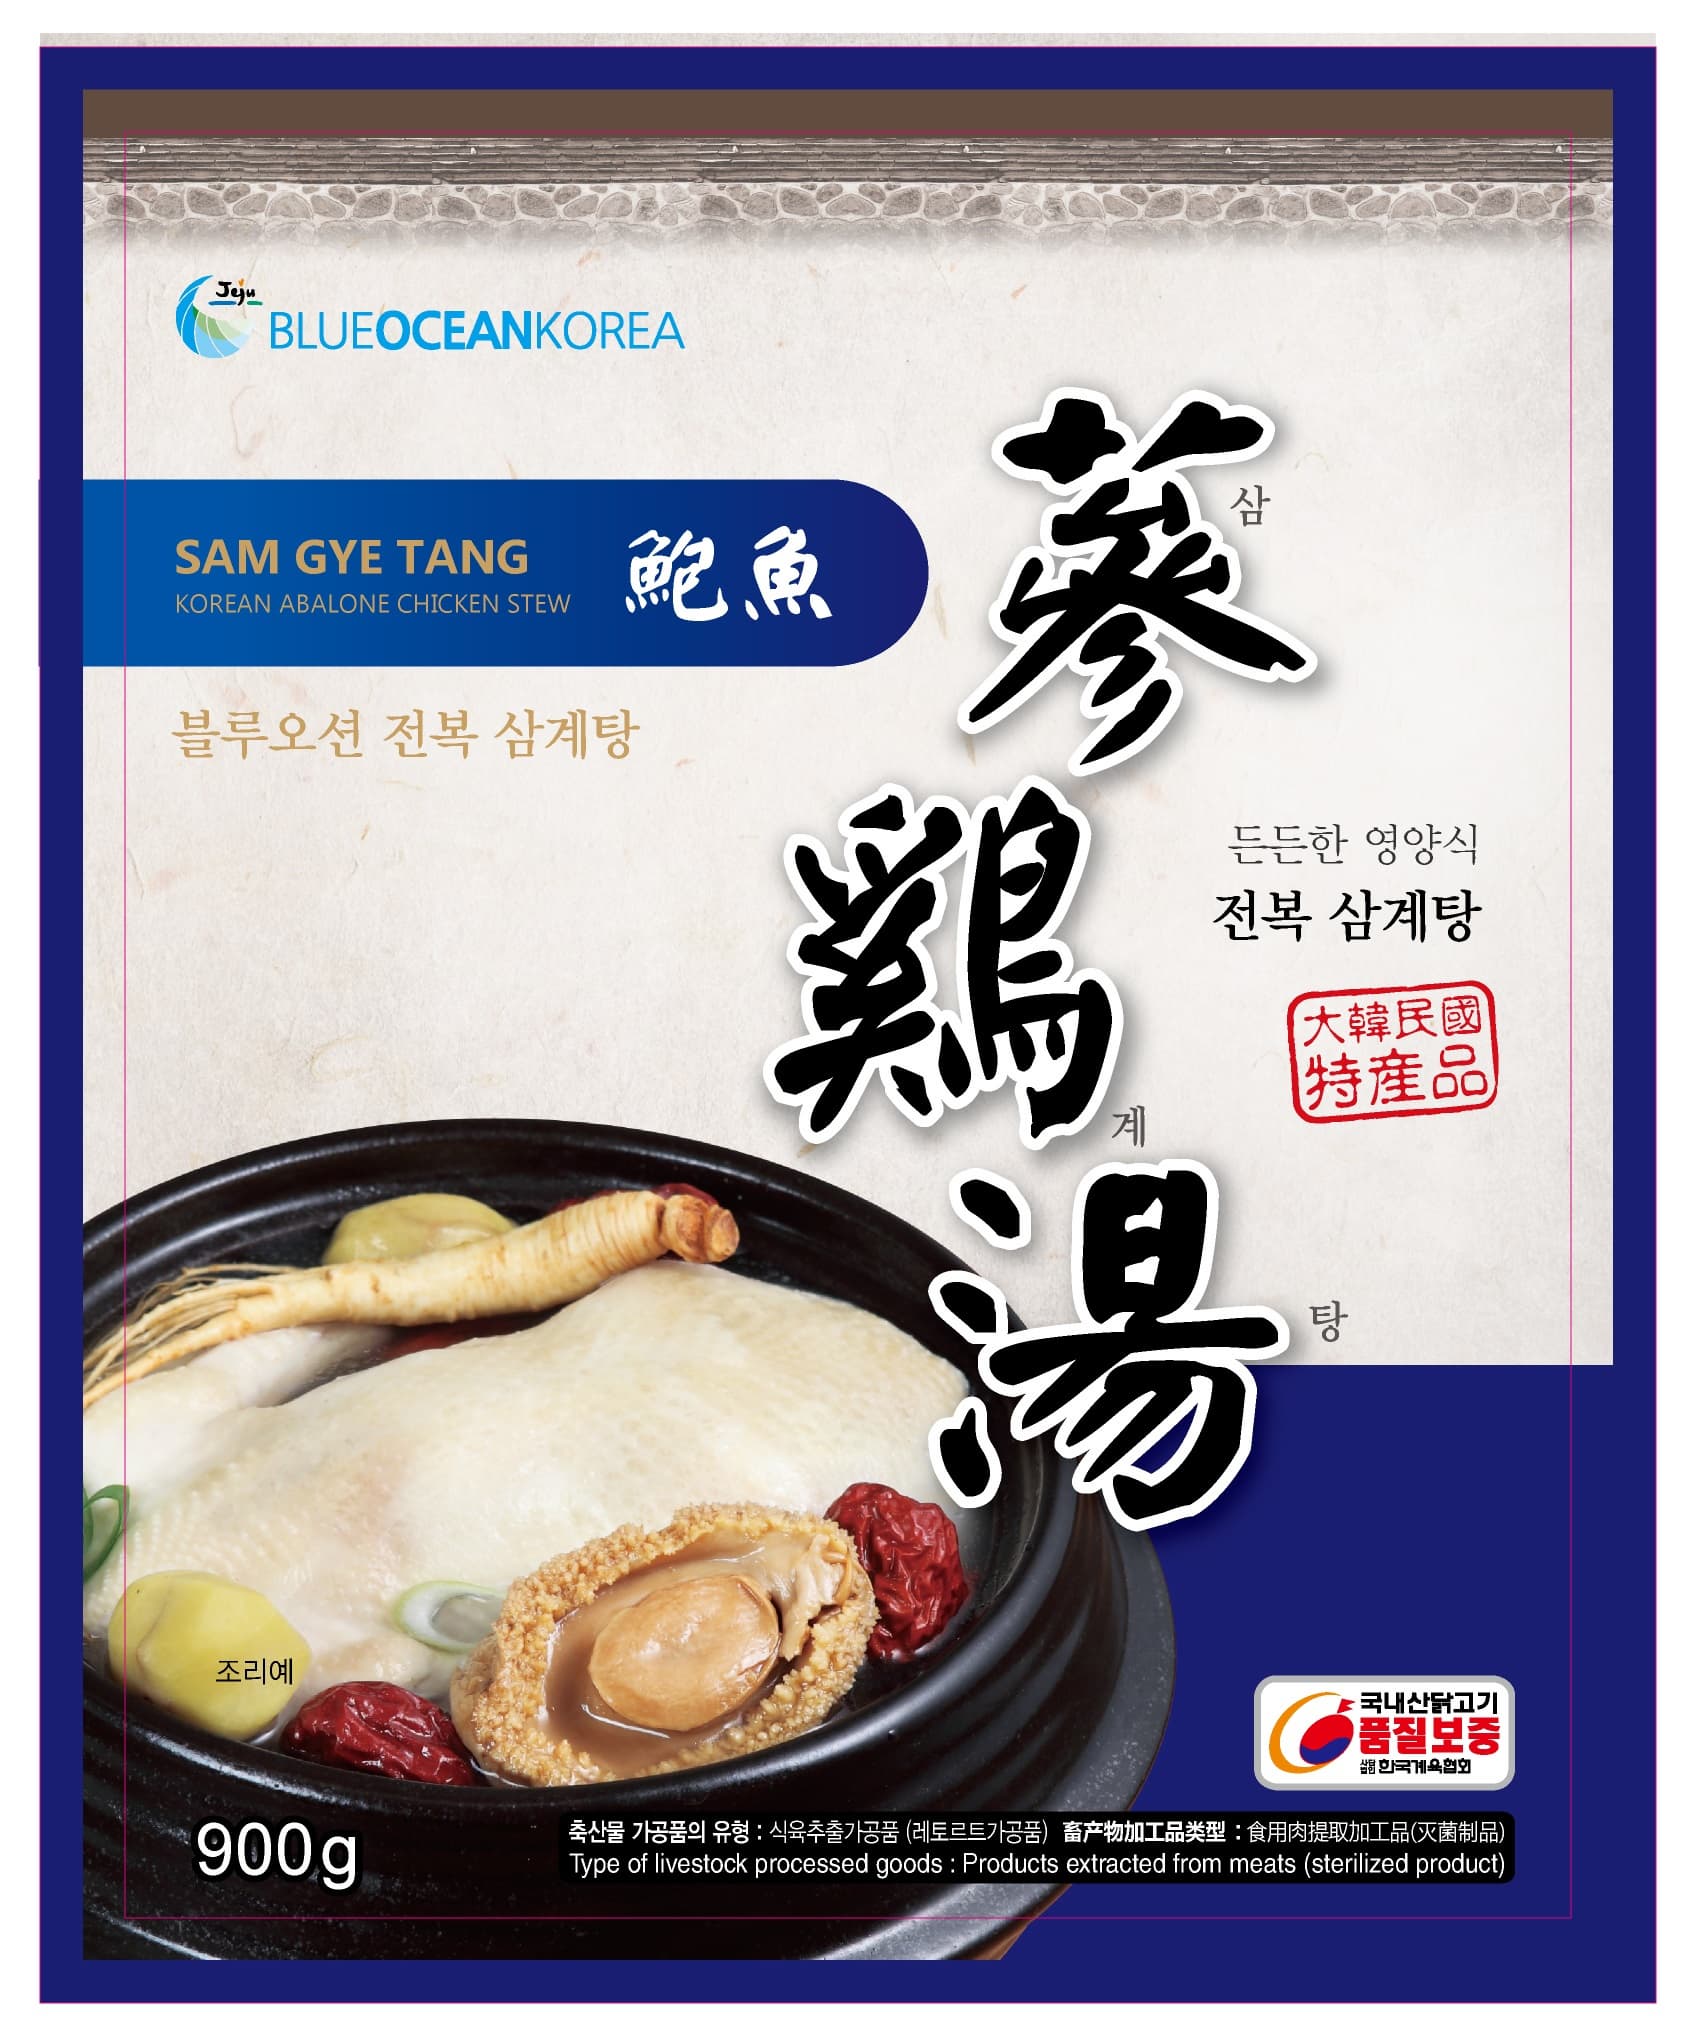 Abalone SAMGYETANG, JEJU BLUEOCEAN KOREA